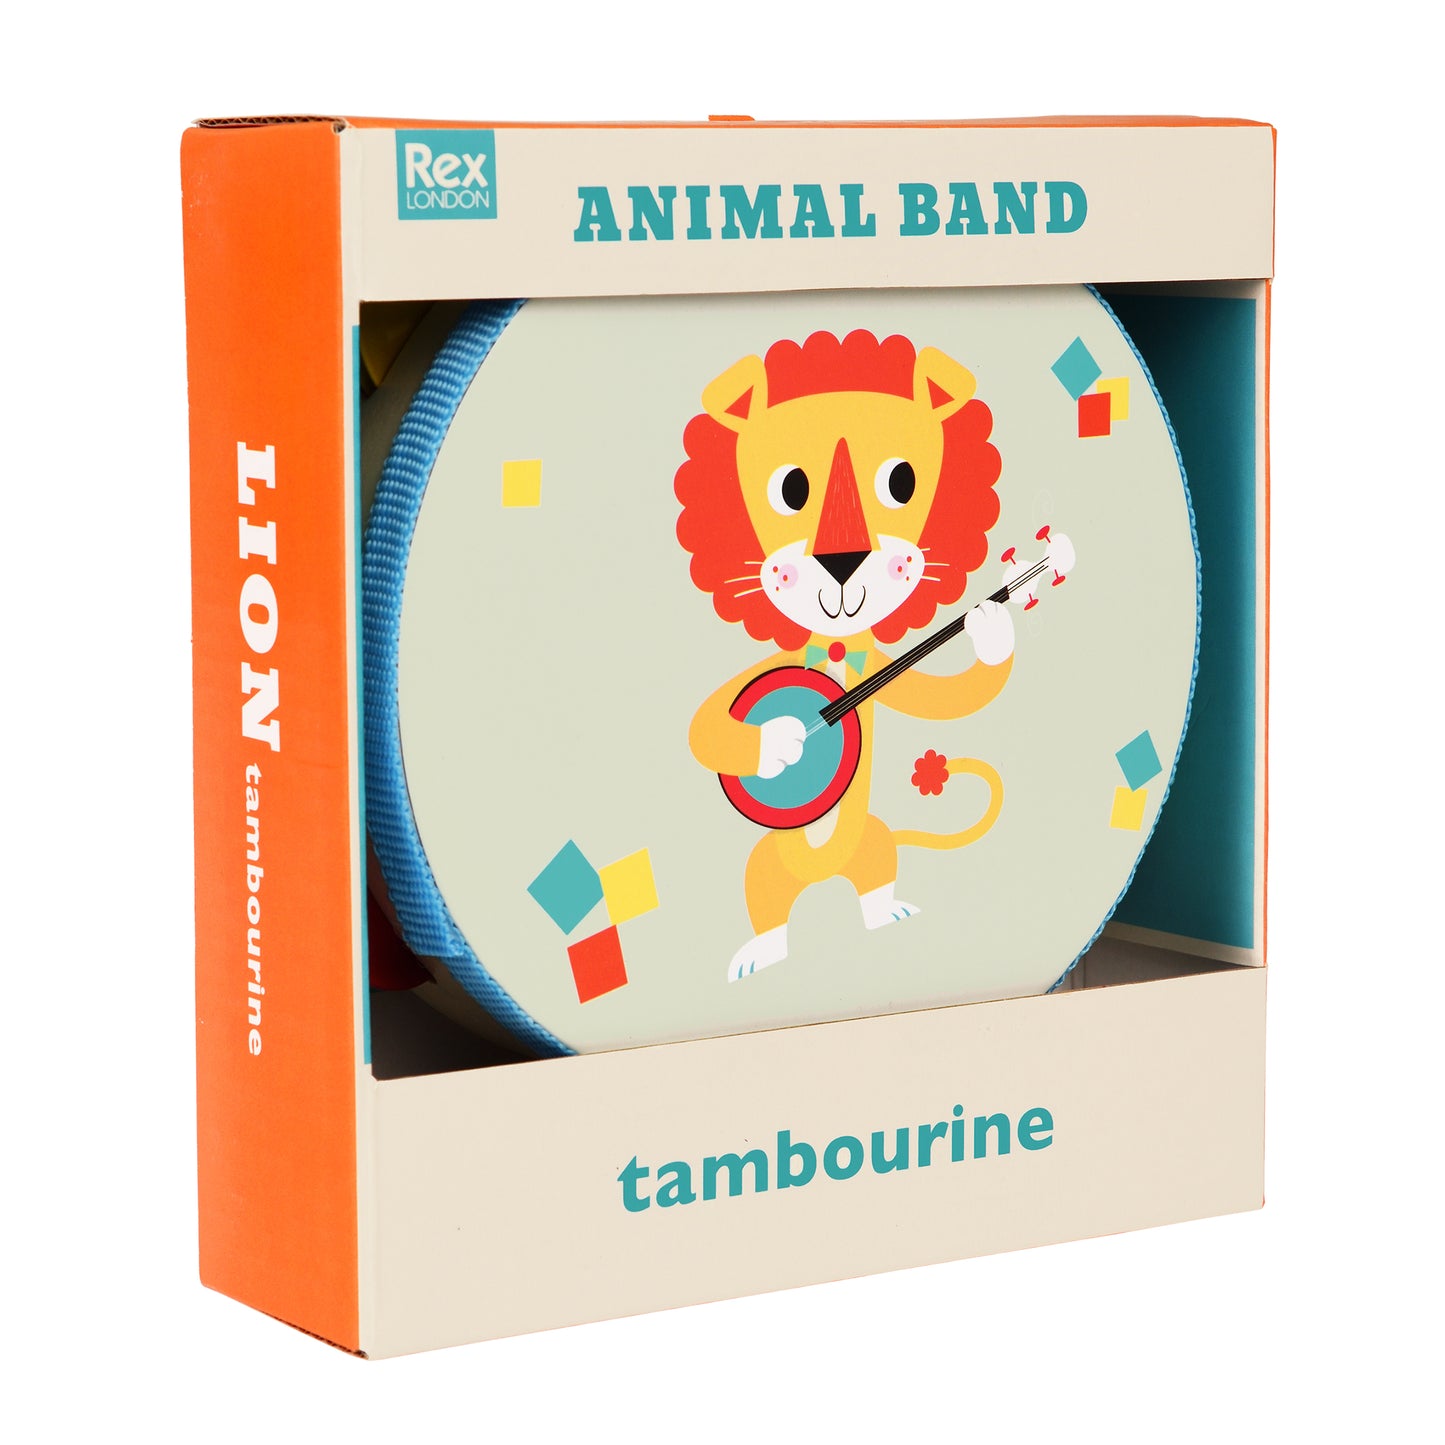 || Rex London || Tamboerijn - Animal Band